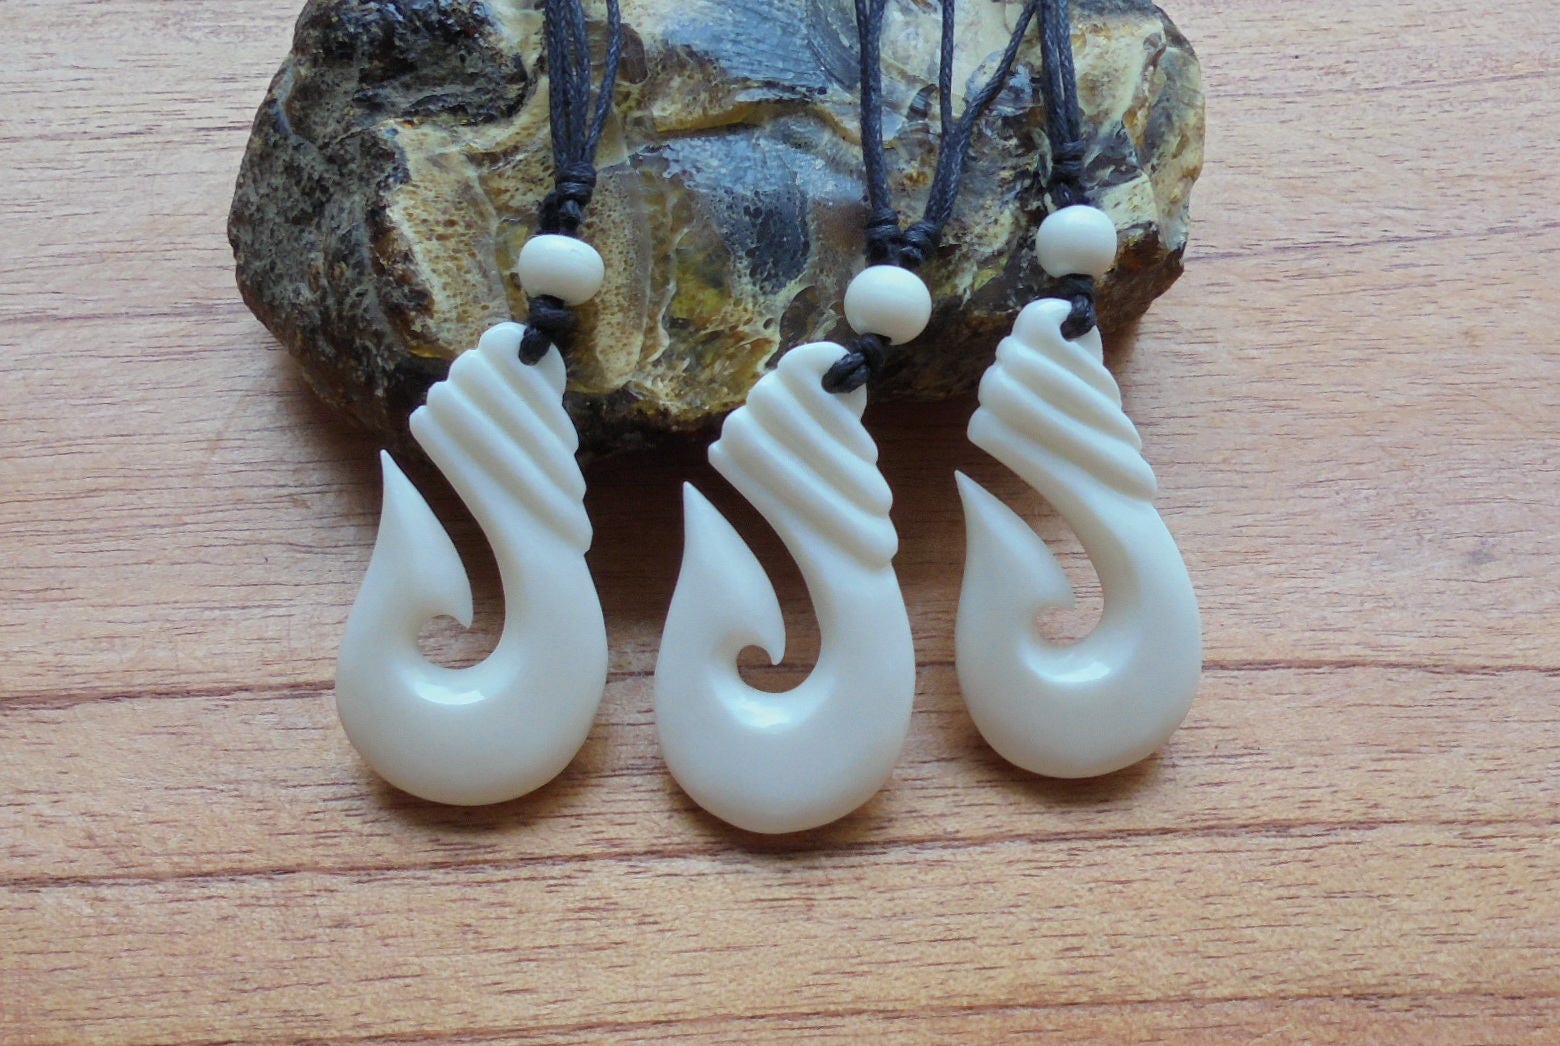 Madeinsea© - Fish Hook Necklace Bone